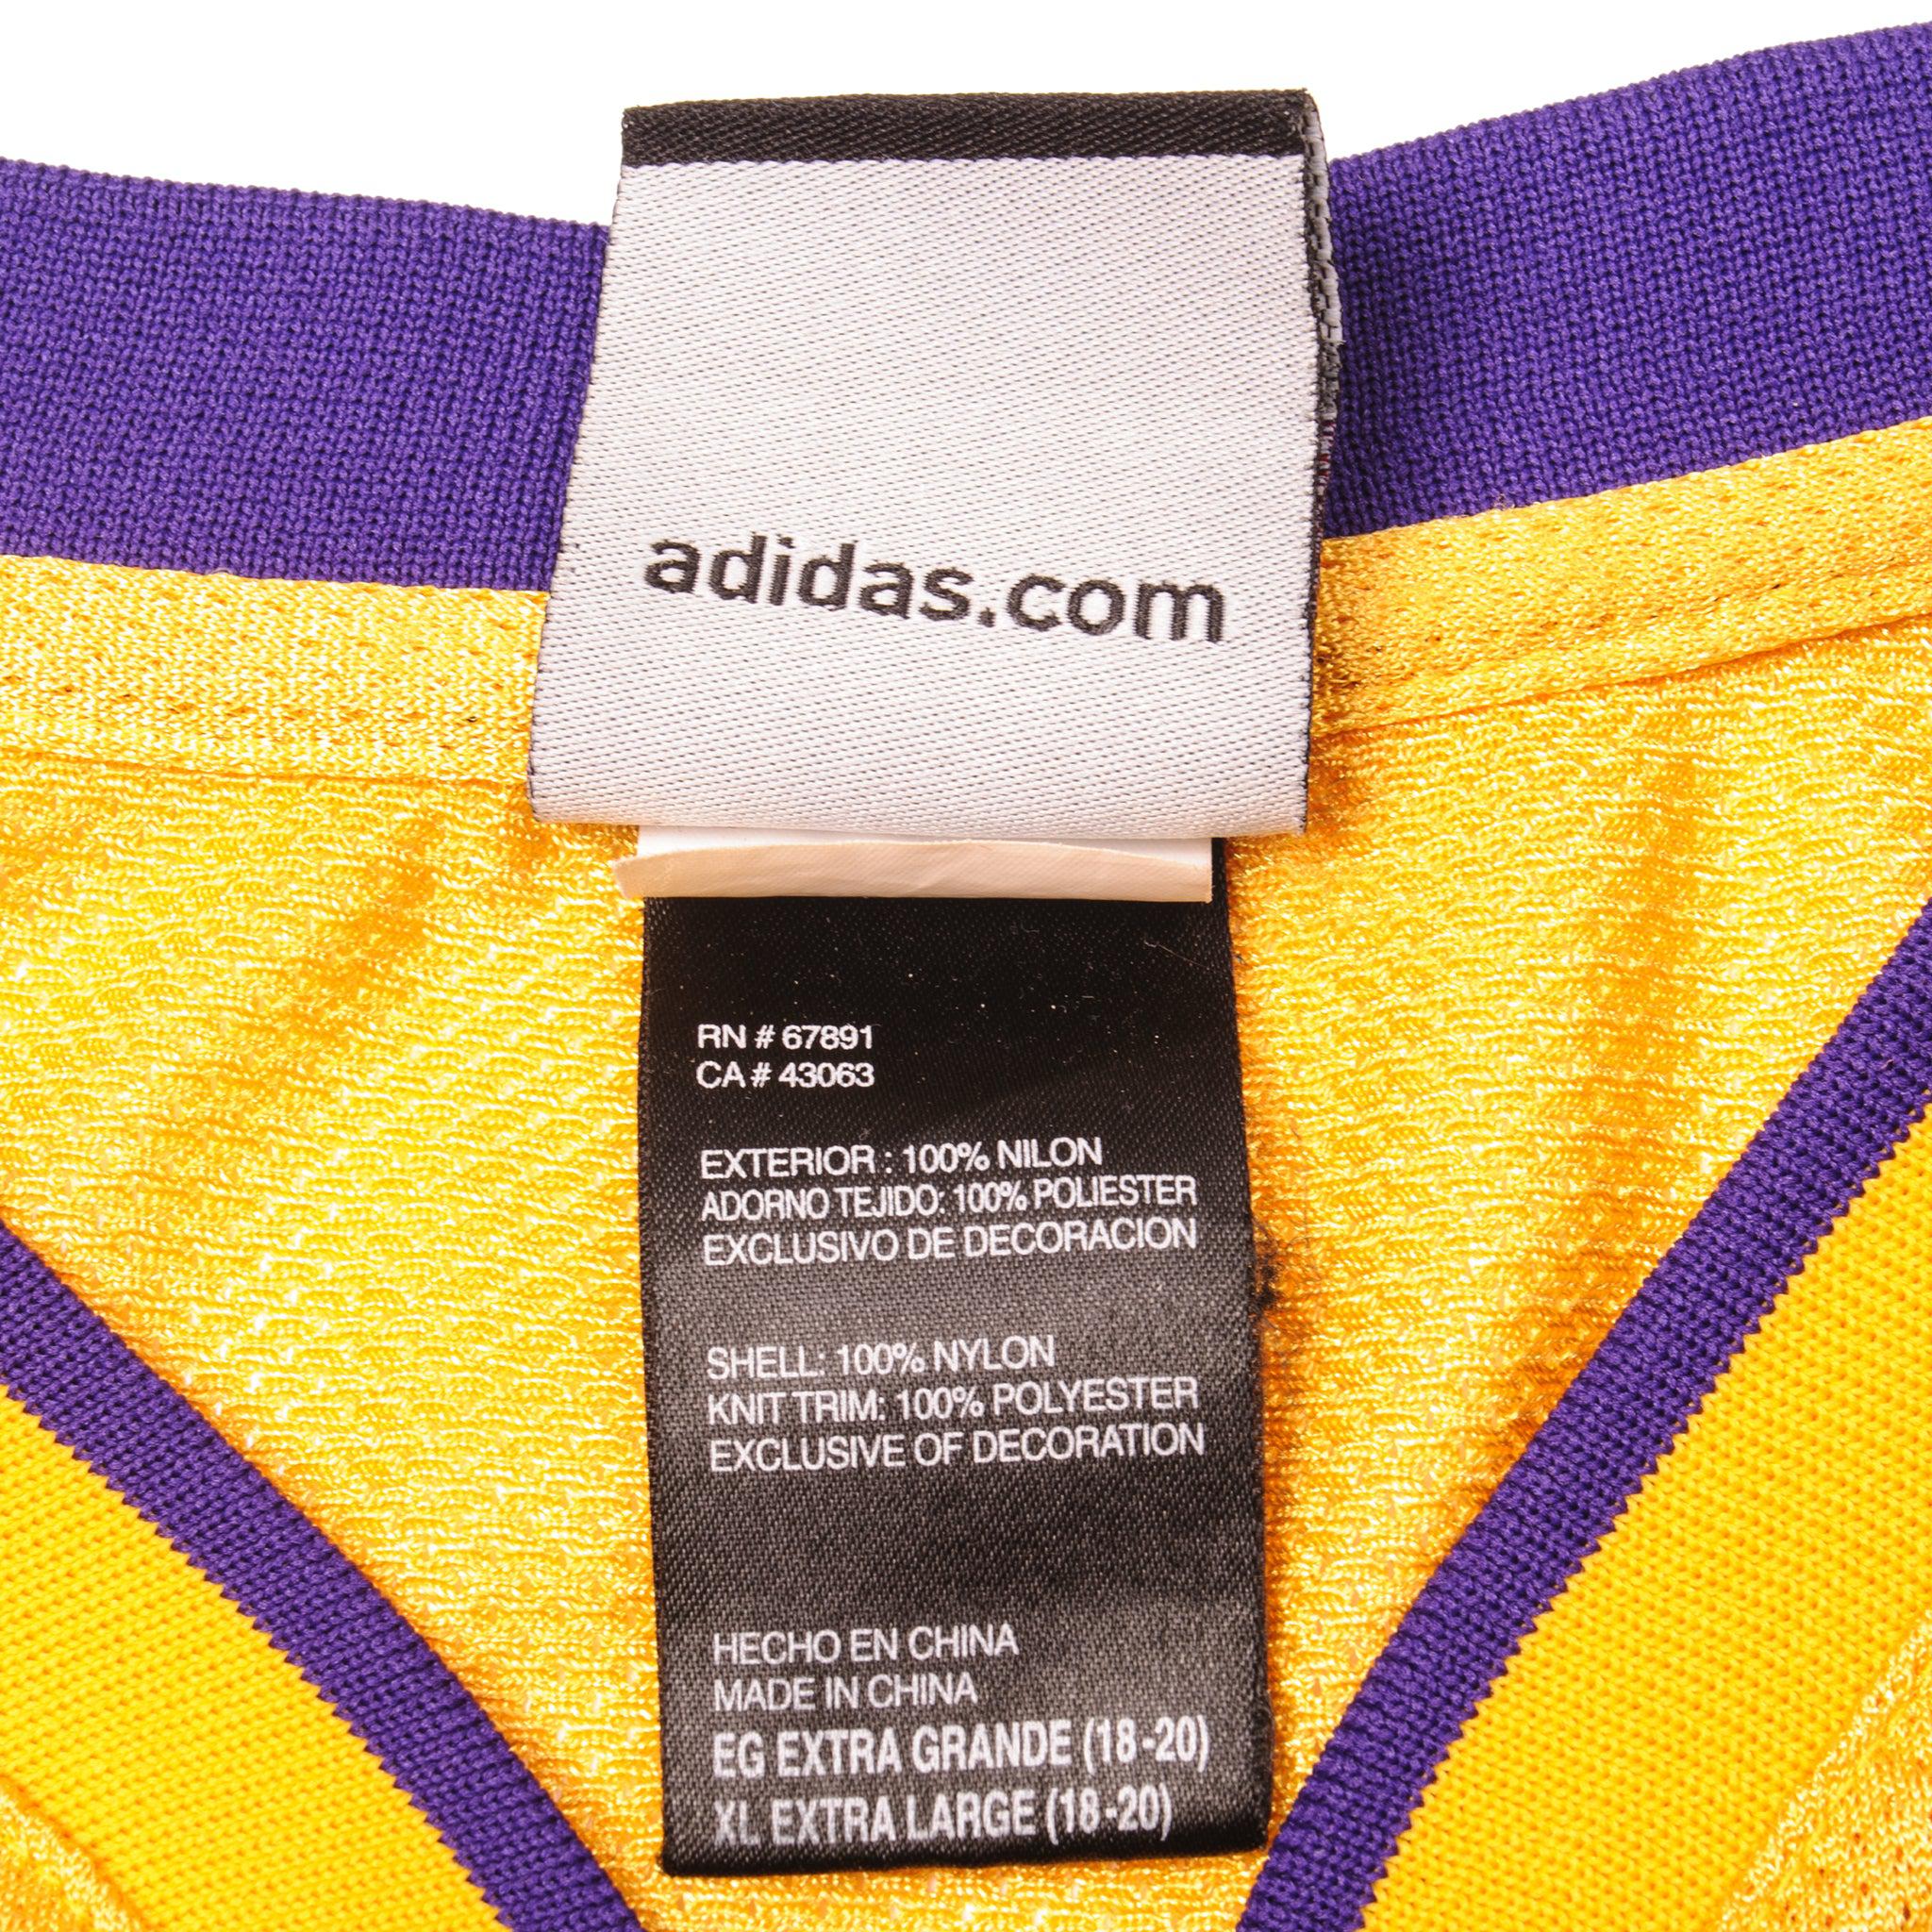 2010-14 LA Lakers Bryant #24 adidas Swingman Alternate Jersey (Very Good) XS